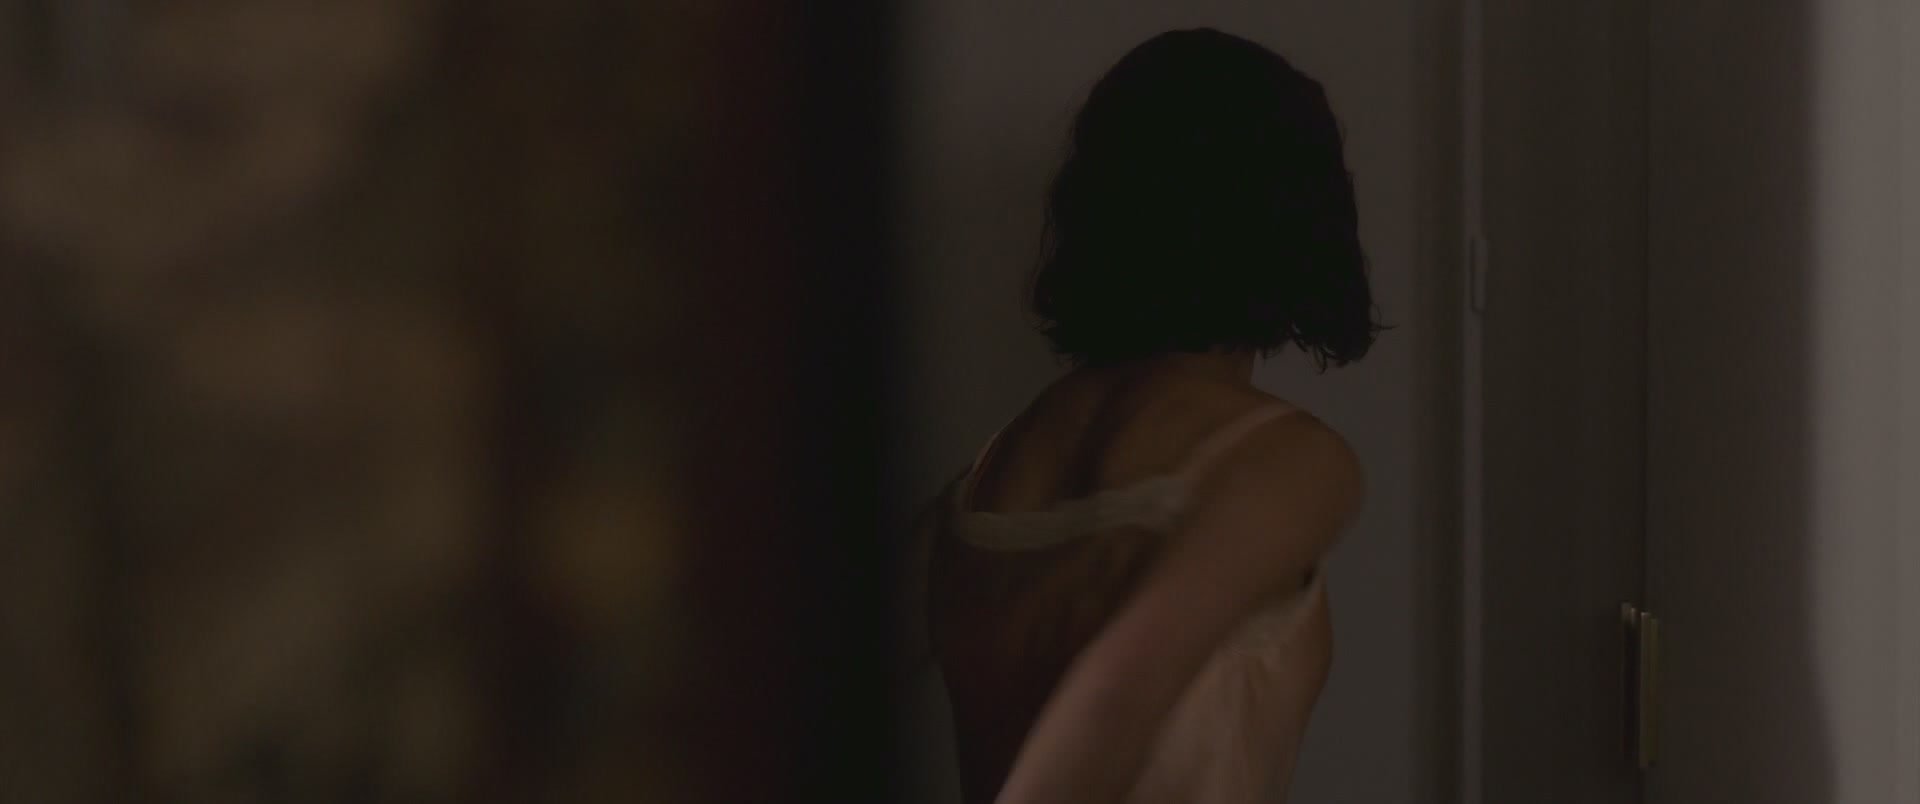 Natalie Portman Nude - Planetarium (2016) HD 1080p